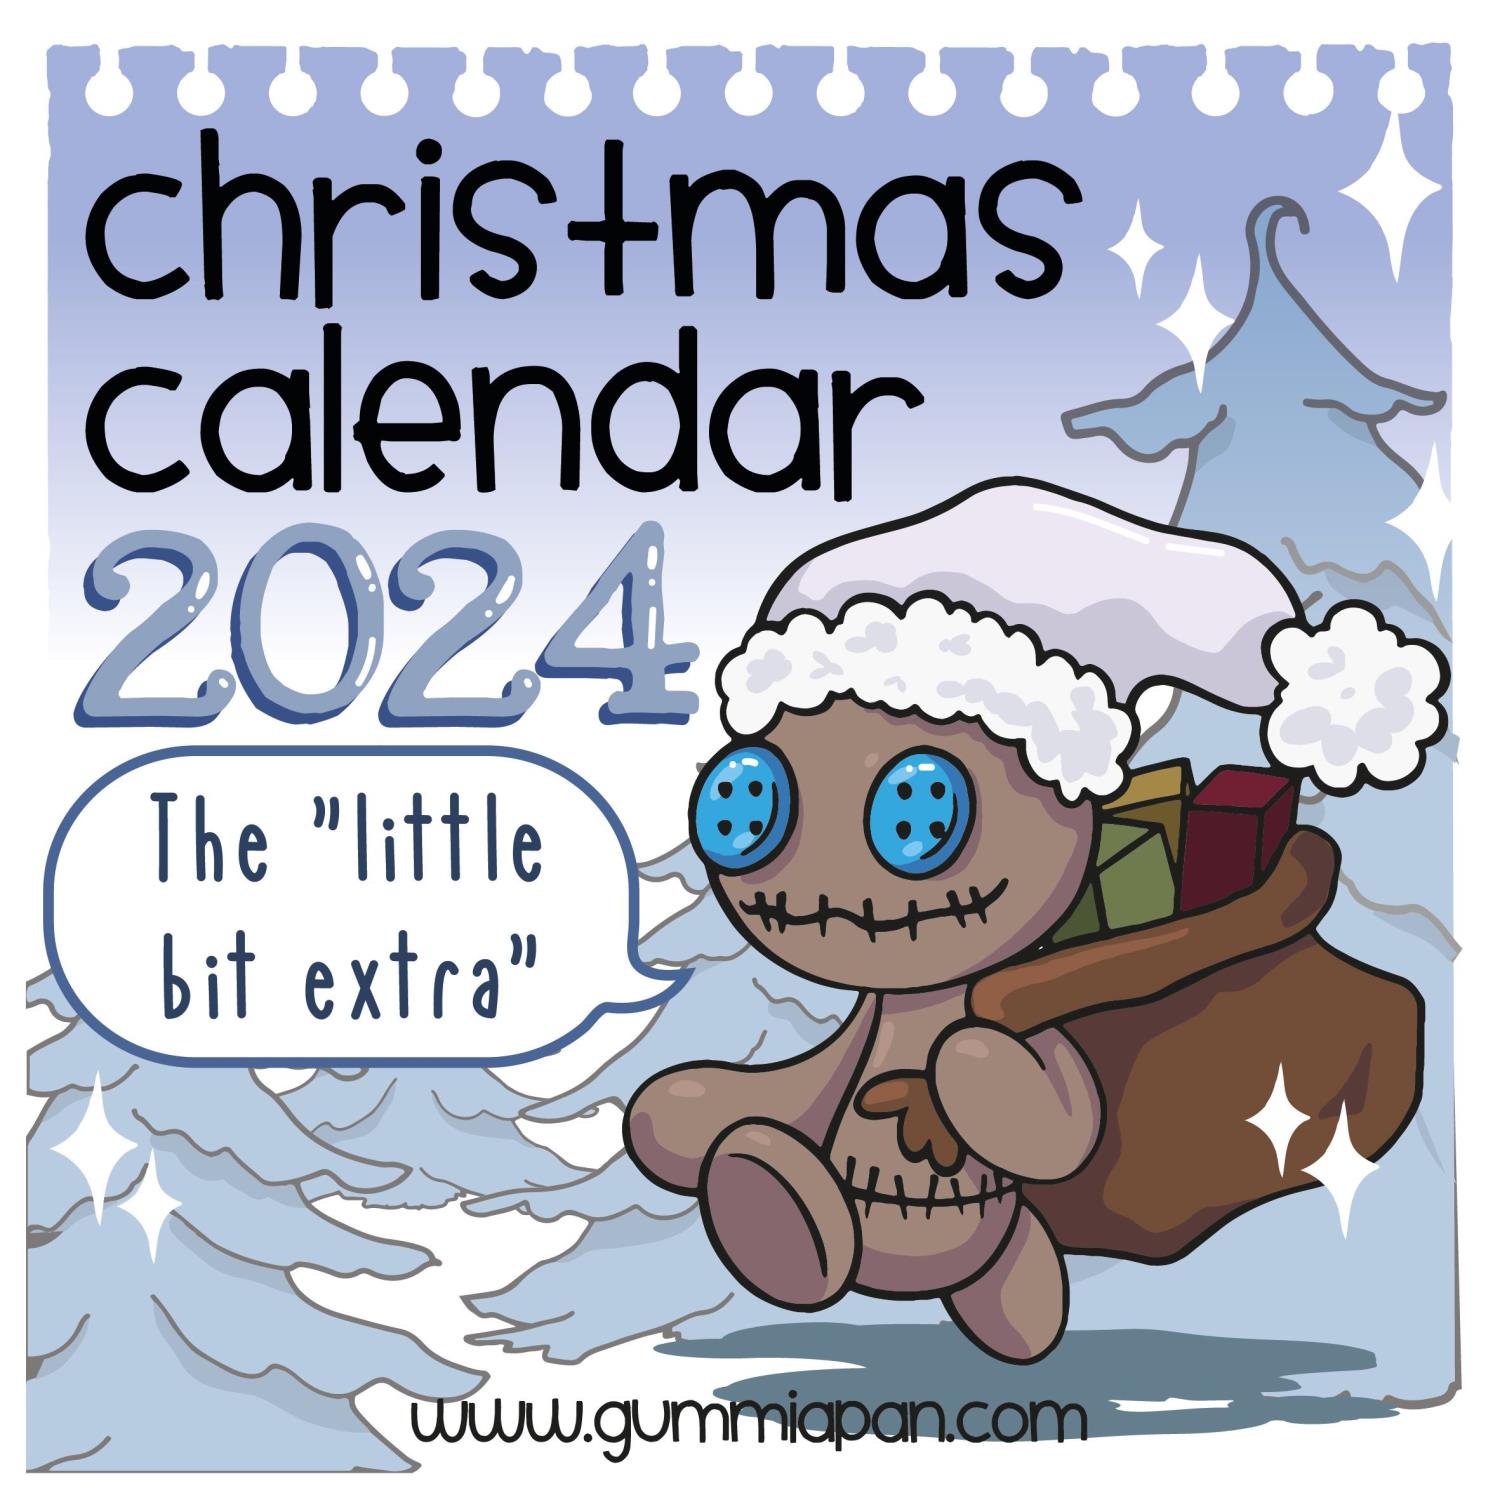 Gummiapan: "The little bit extra" Christmas Calendar 2024